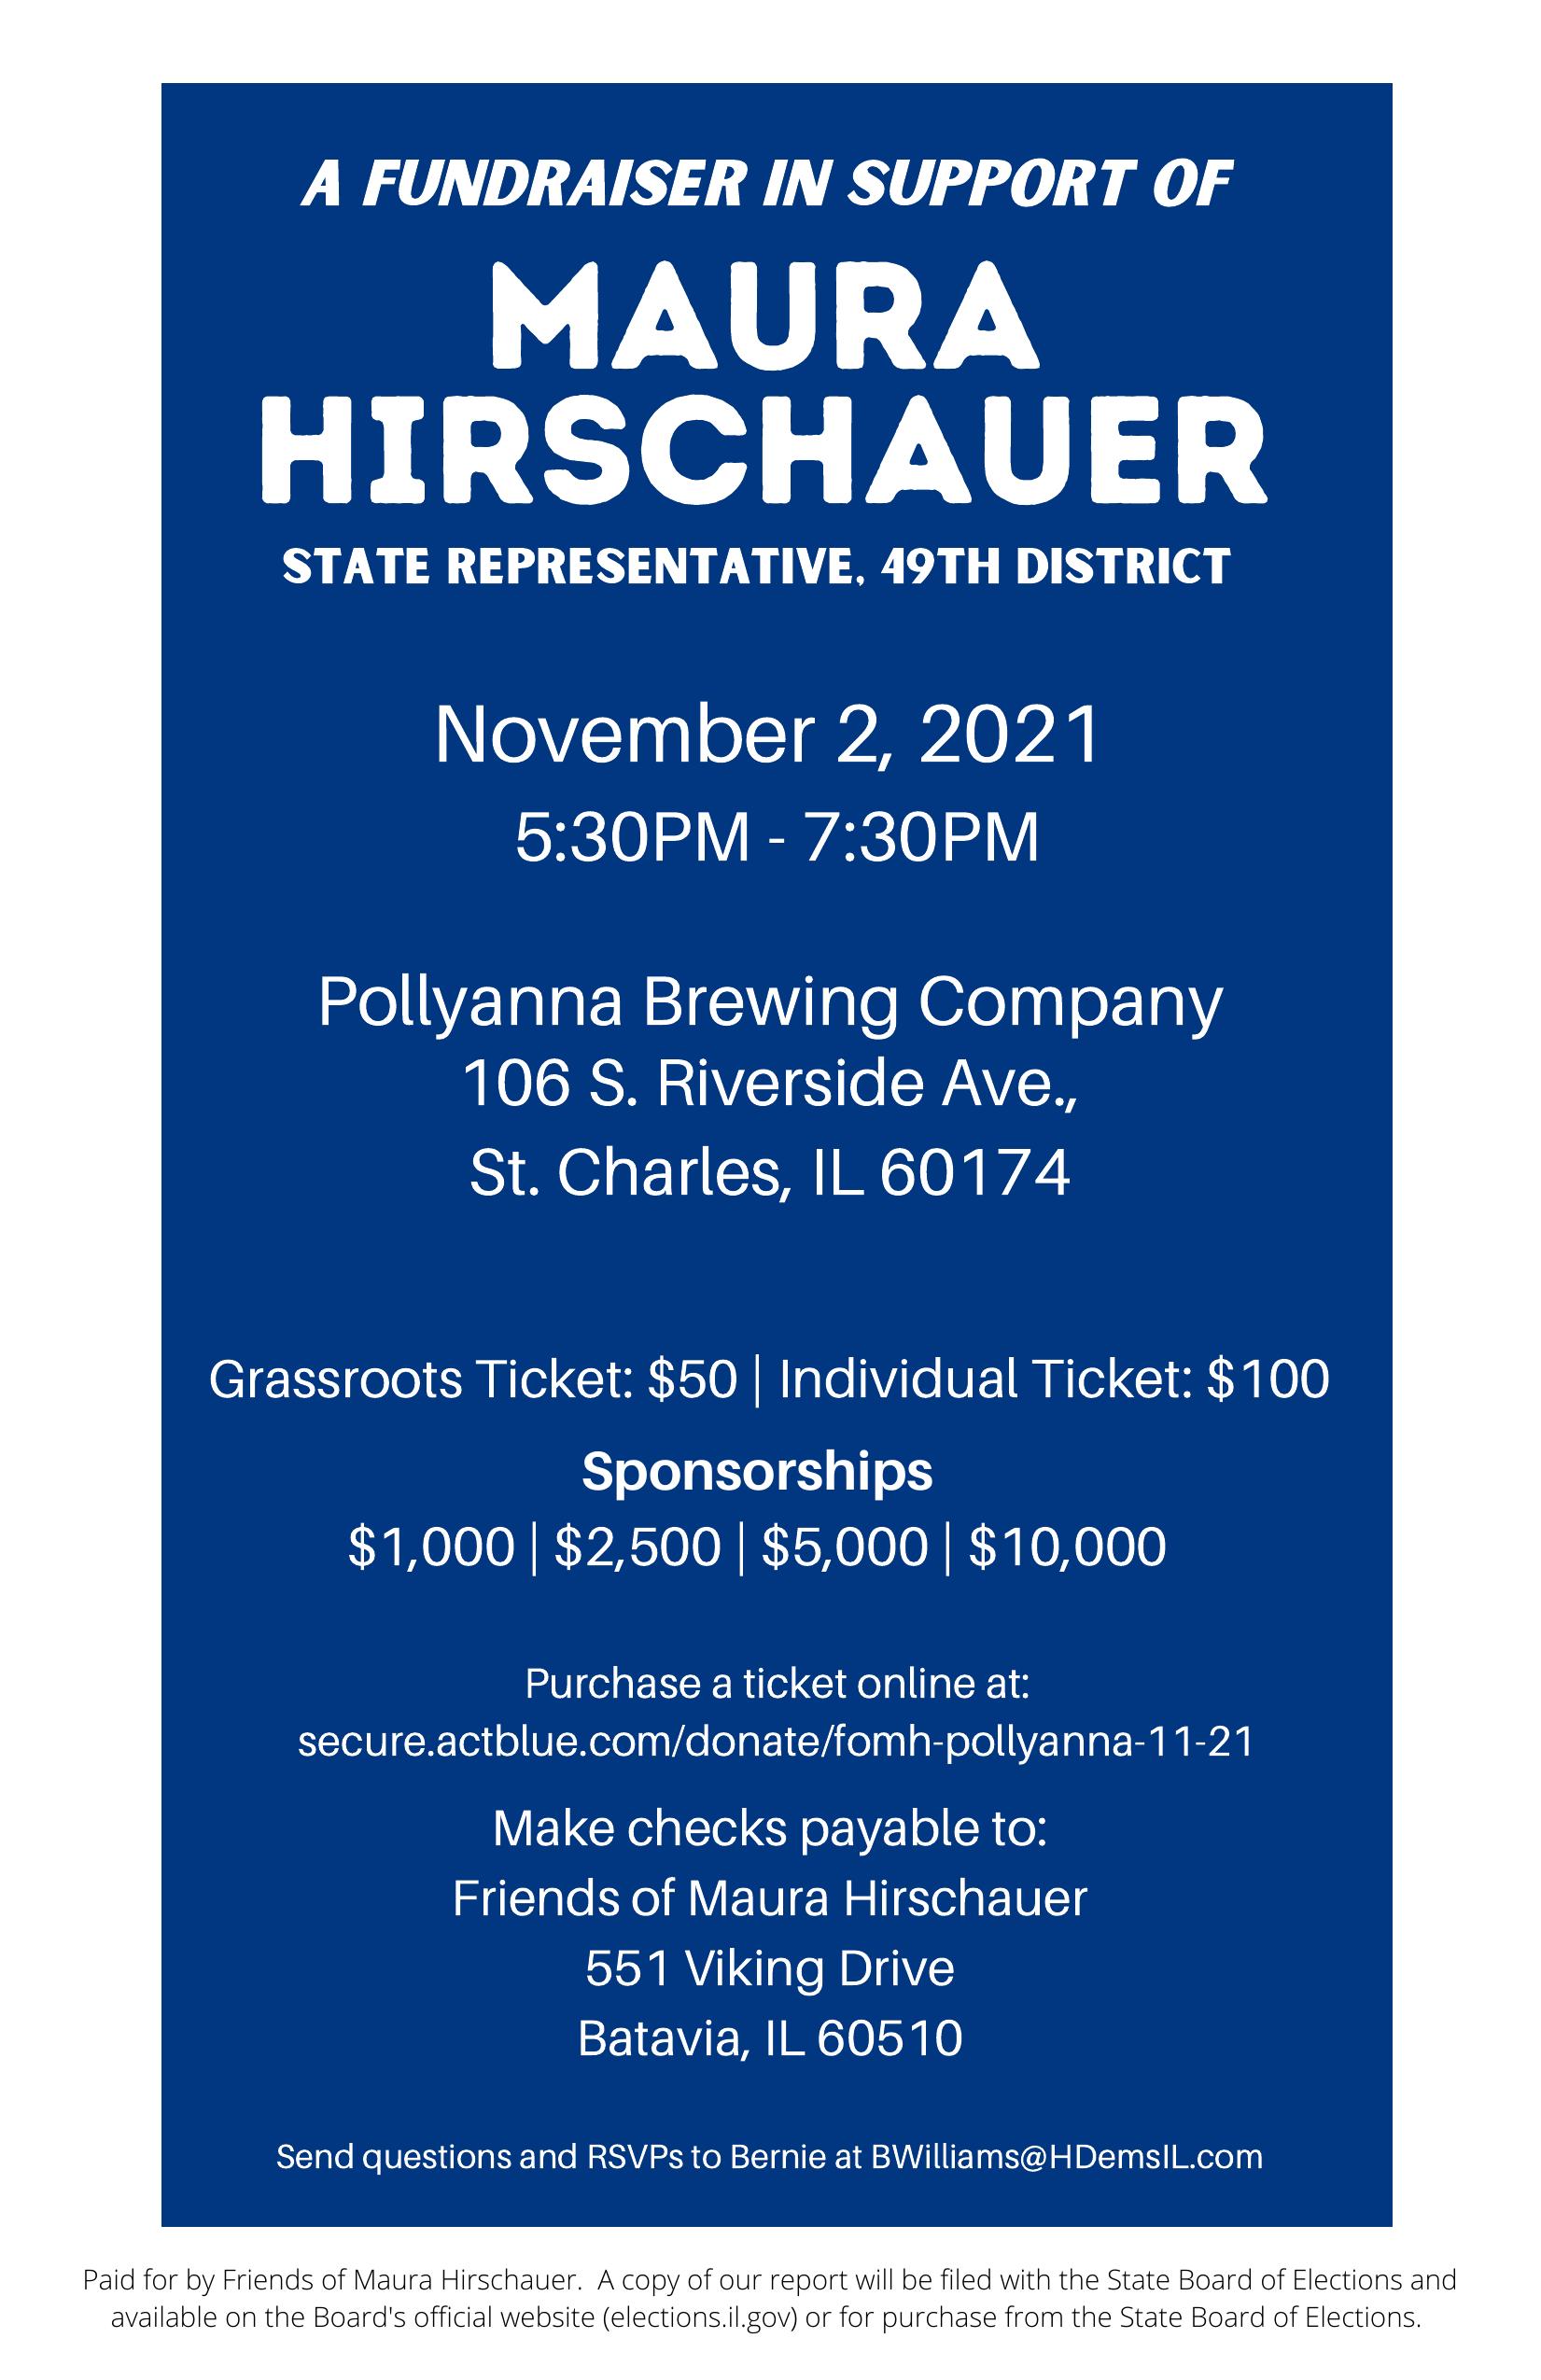 Fundraiser for Maura Hirschauer @ Pollyanna Brewing Company